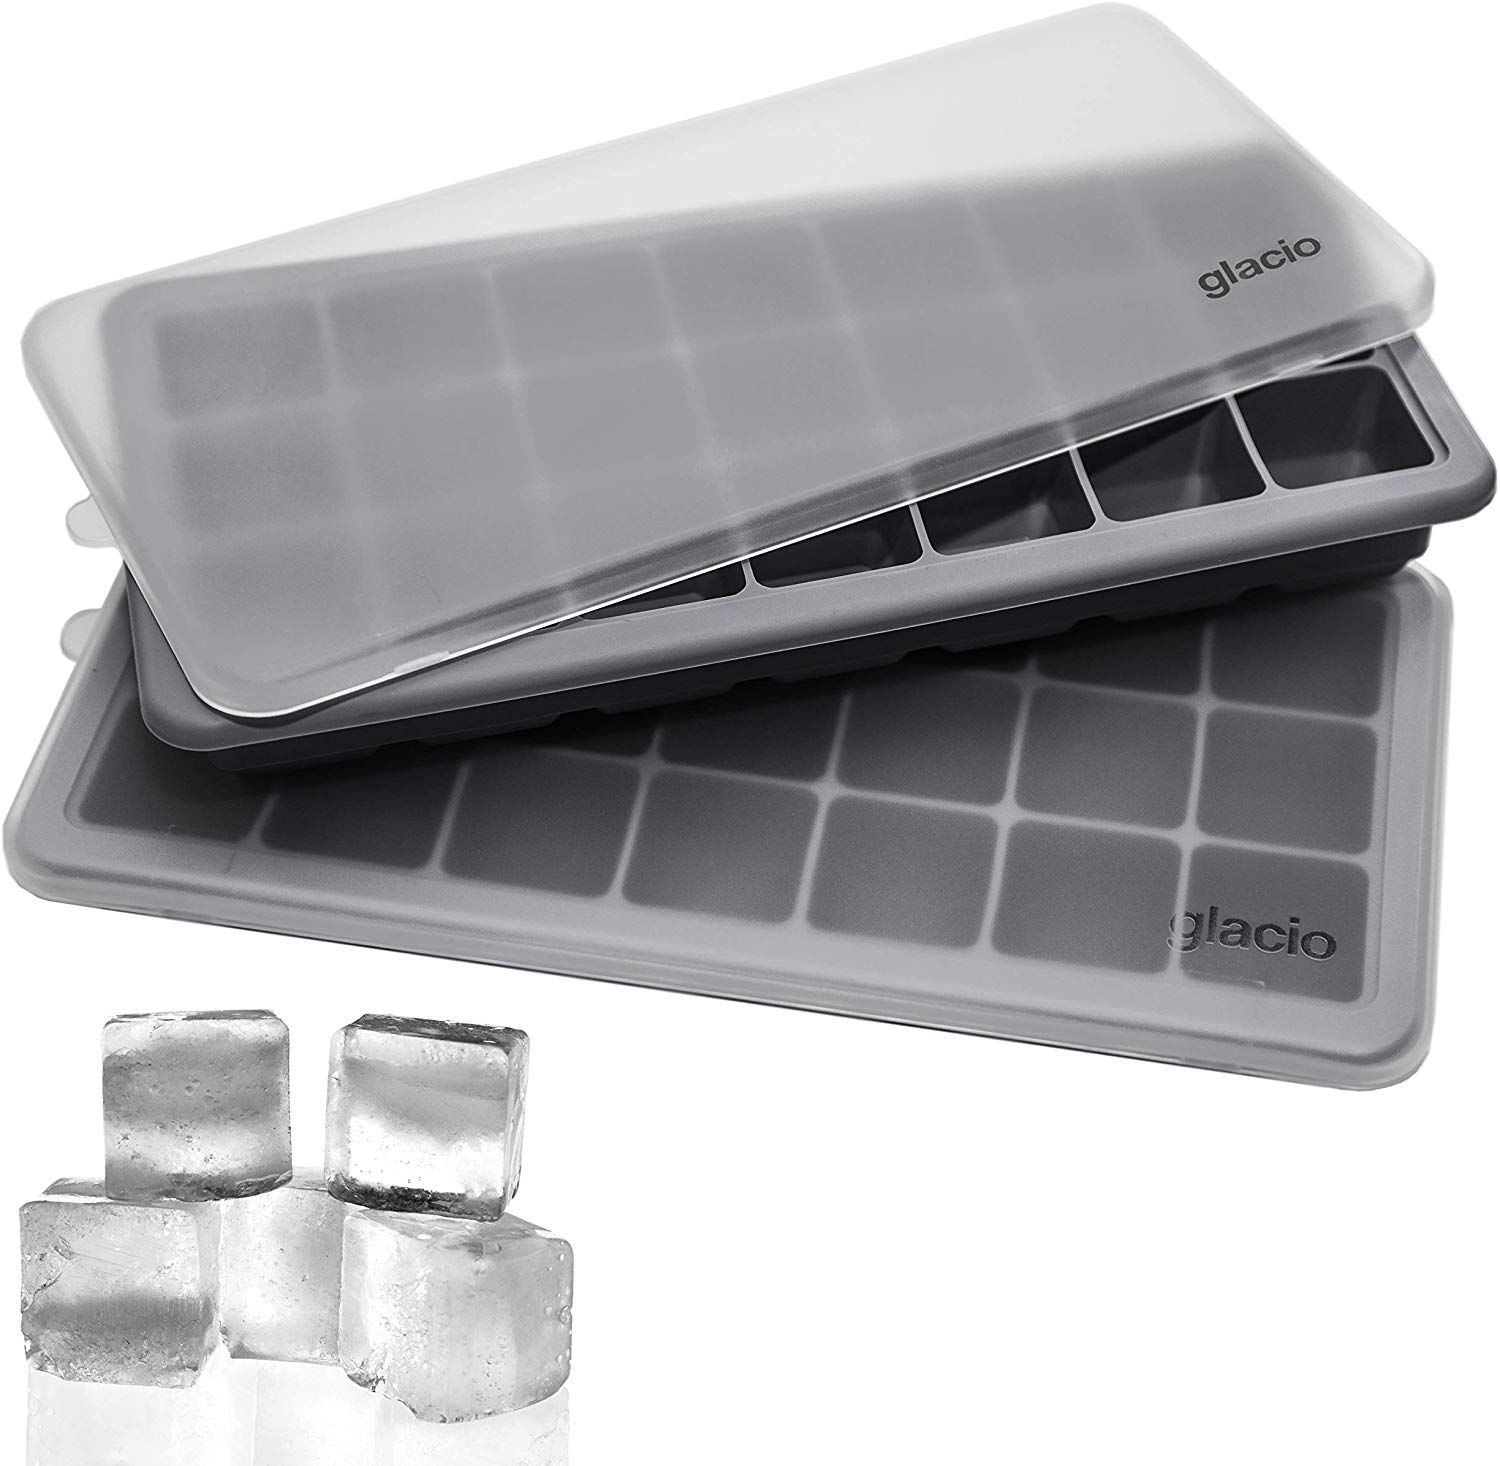 Glacio Premium Silicone Ice Tray Set - 2-in-1 Combo with Large 2